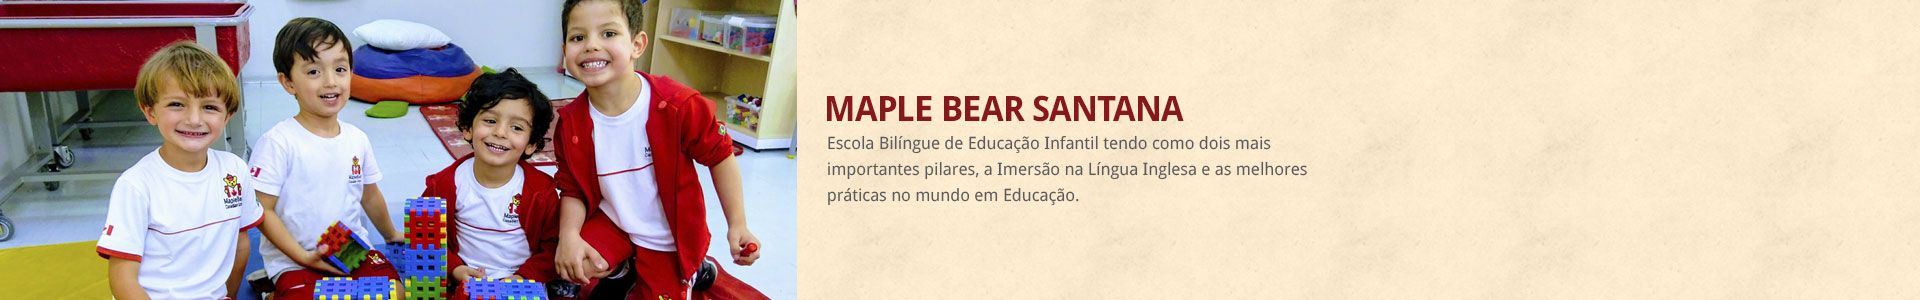 banner a maple bear santana